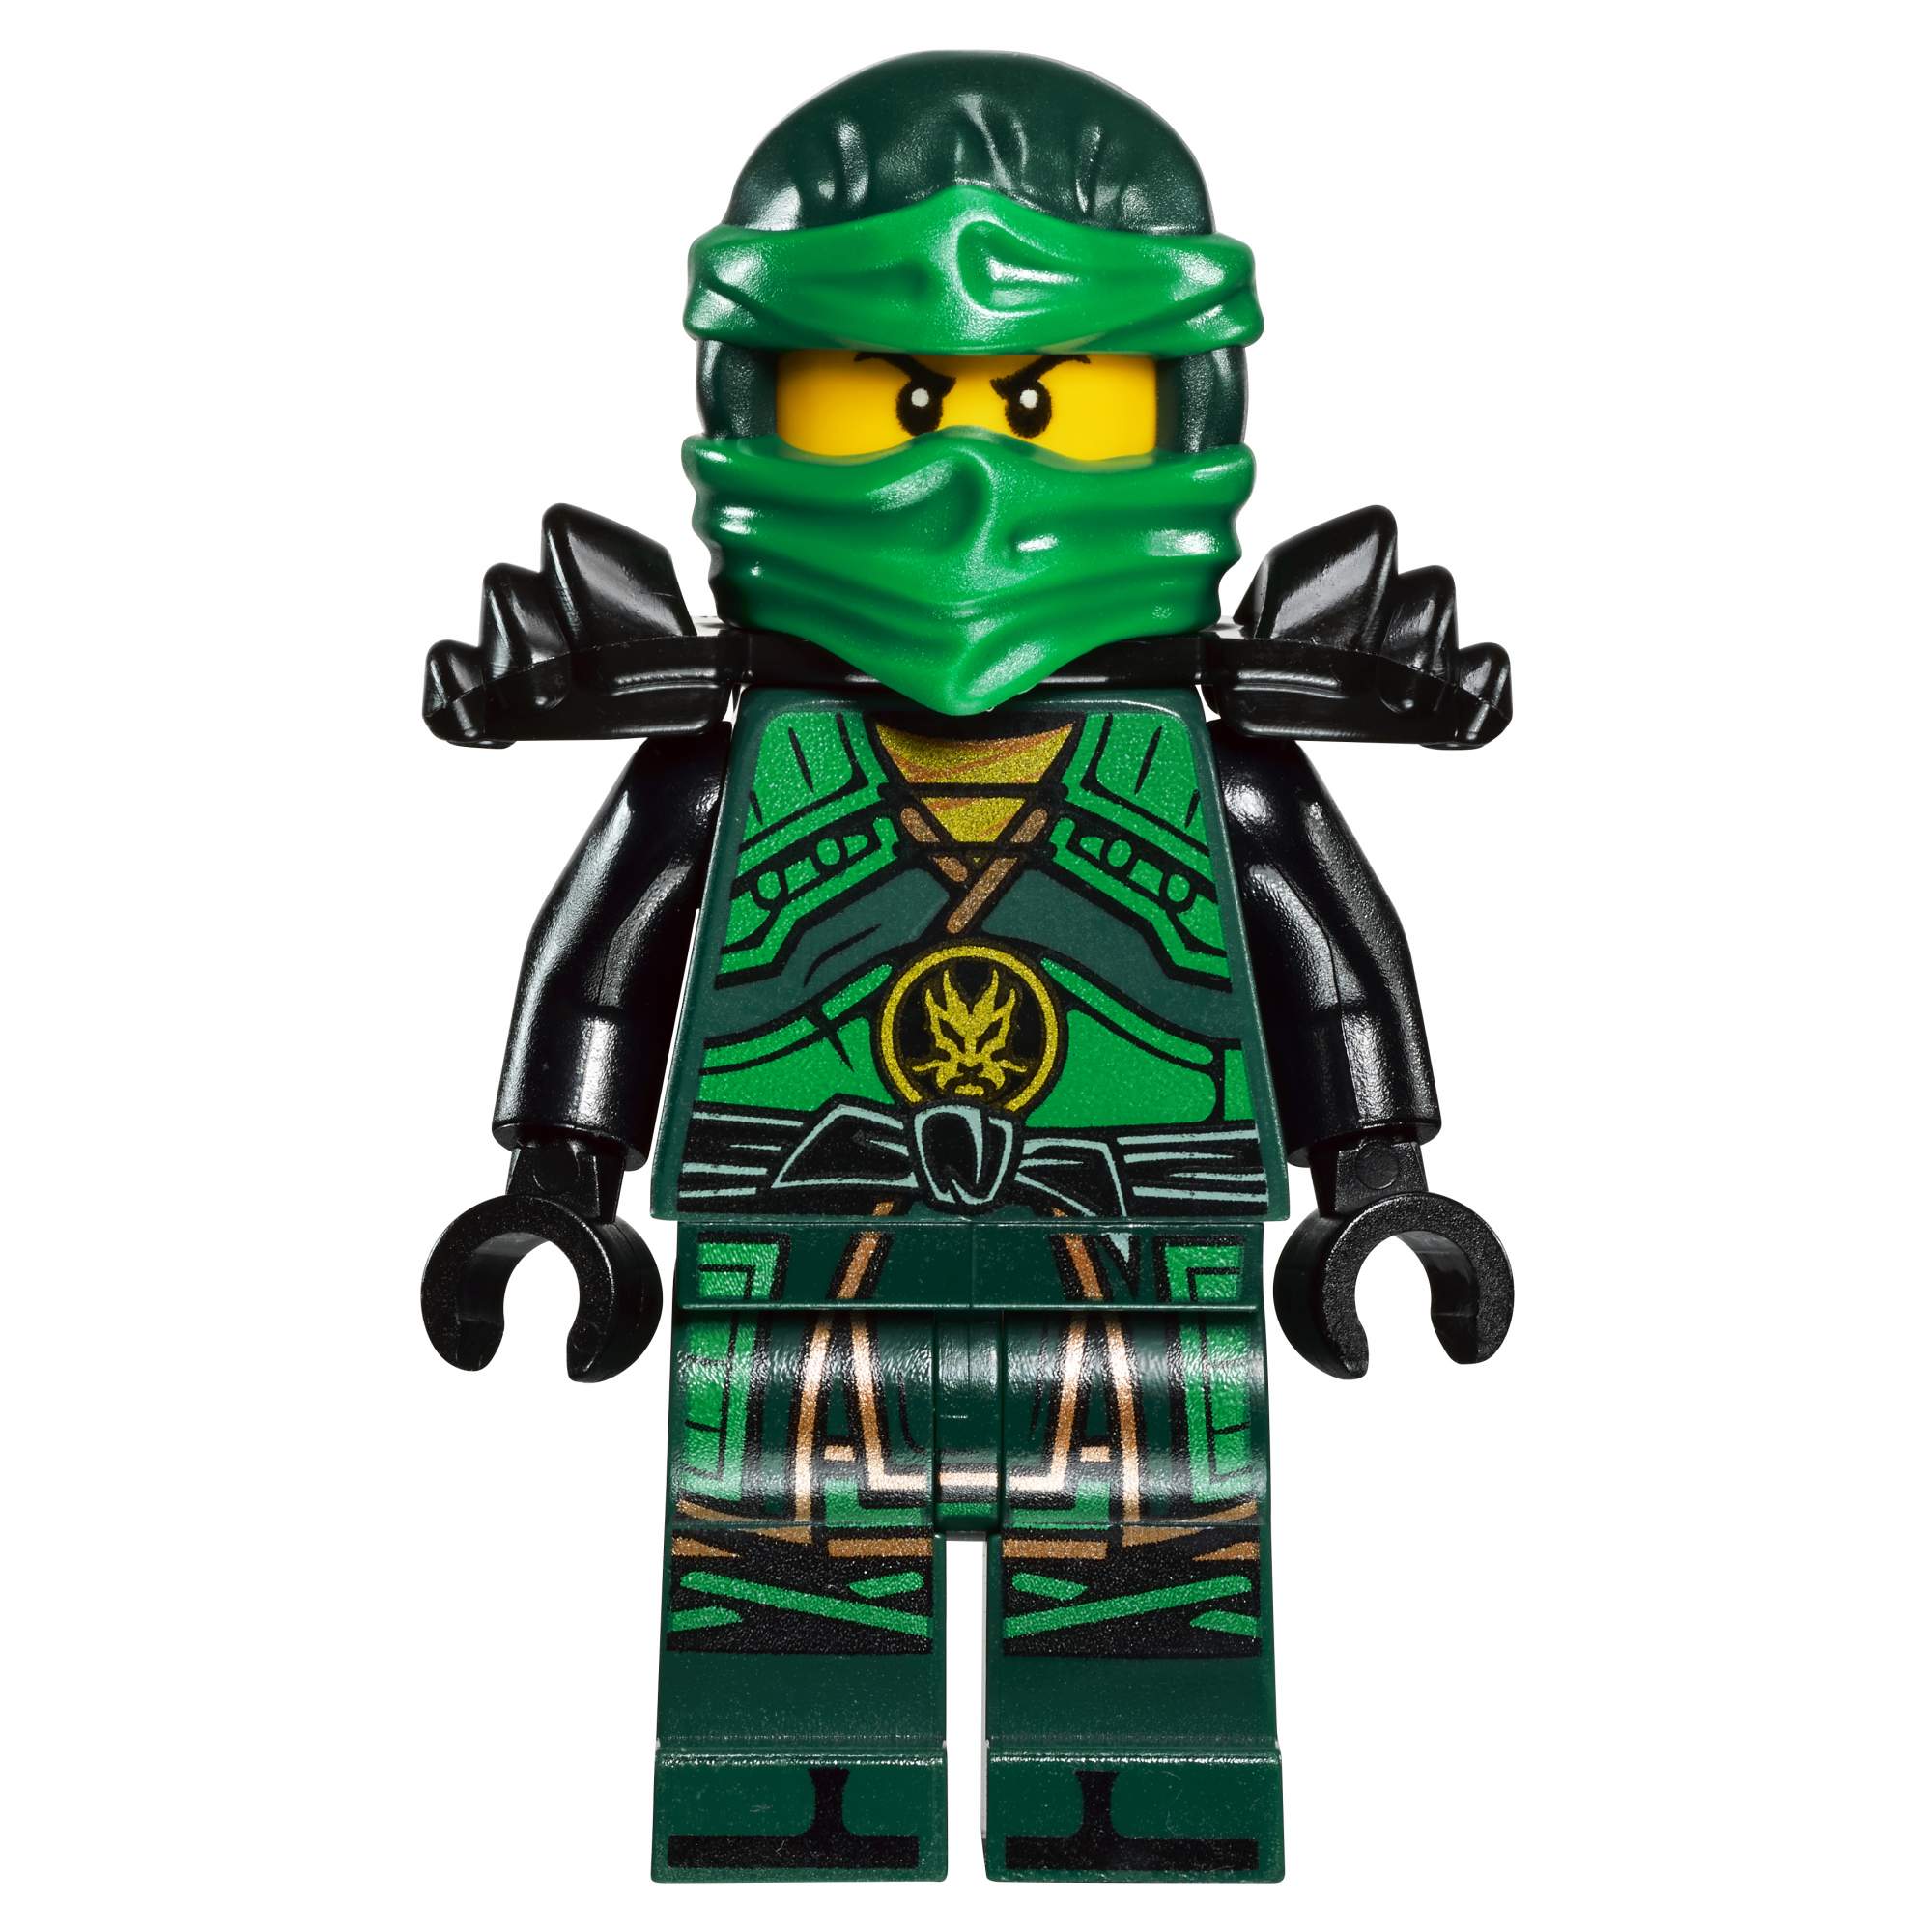 Конструктор LEGO Ninjago Железные удары судьбы (70626)